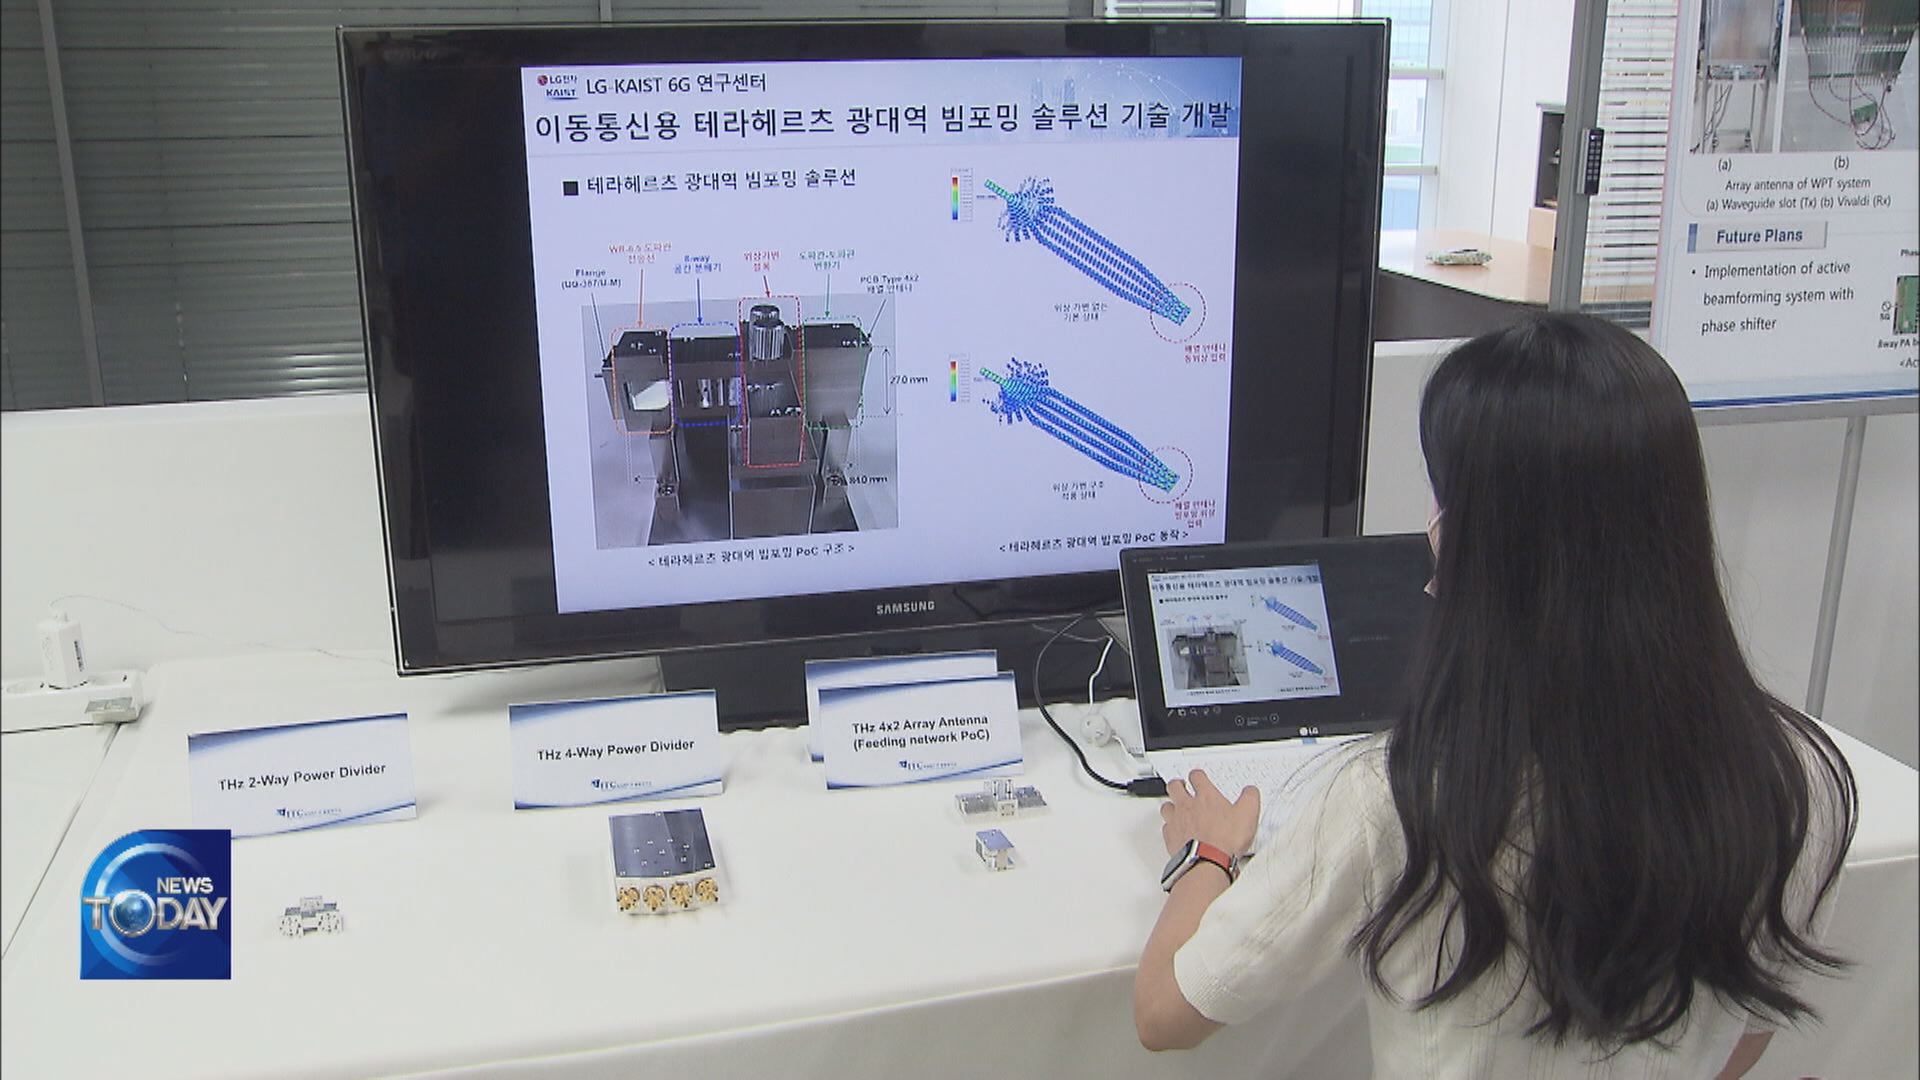 S. KOREA'S 6G COMMUNICATIONS TECHNOLOGY